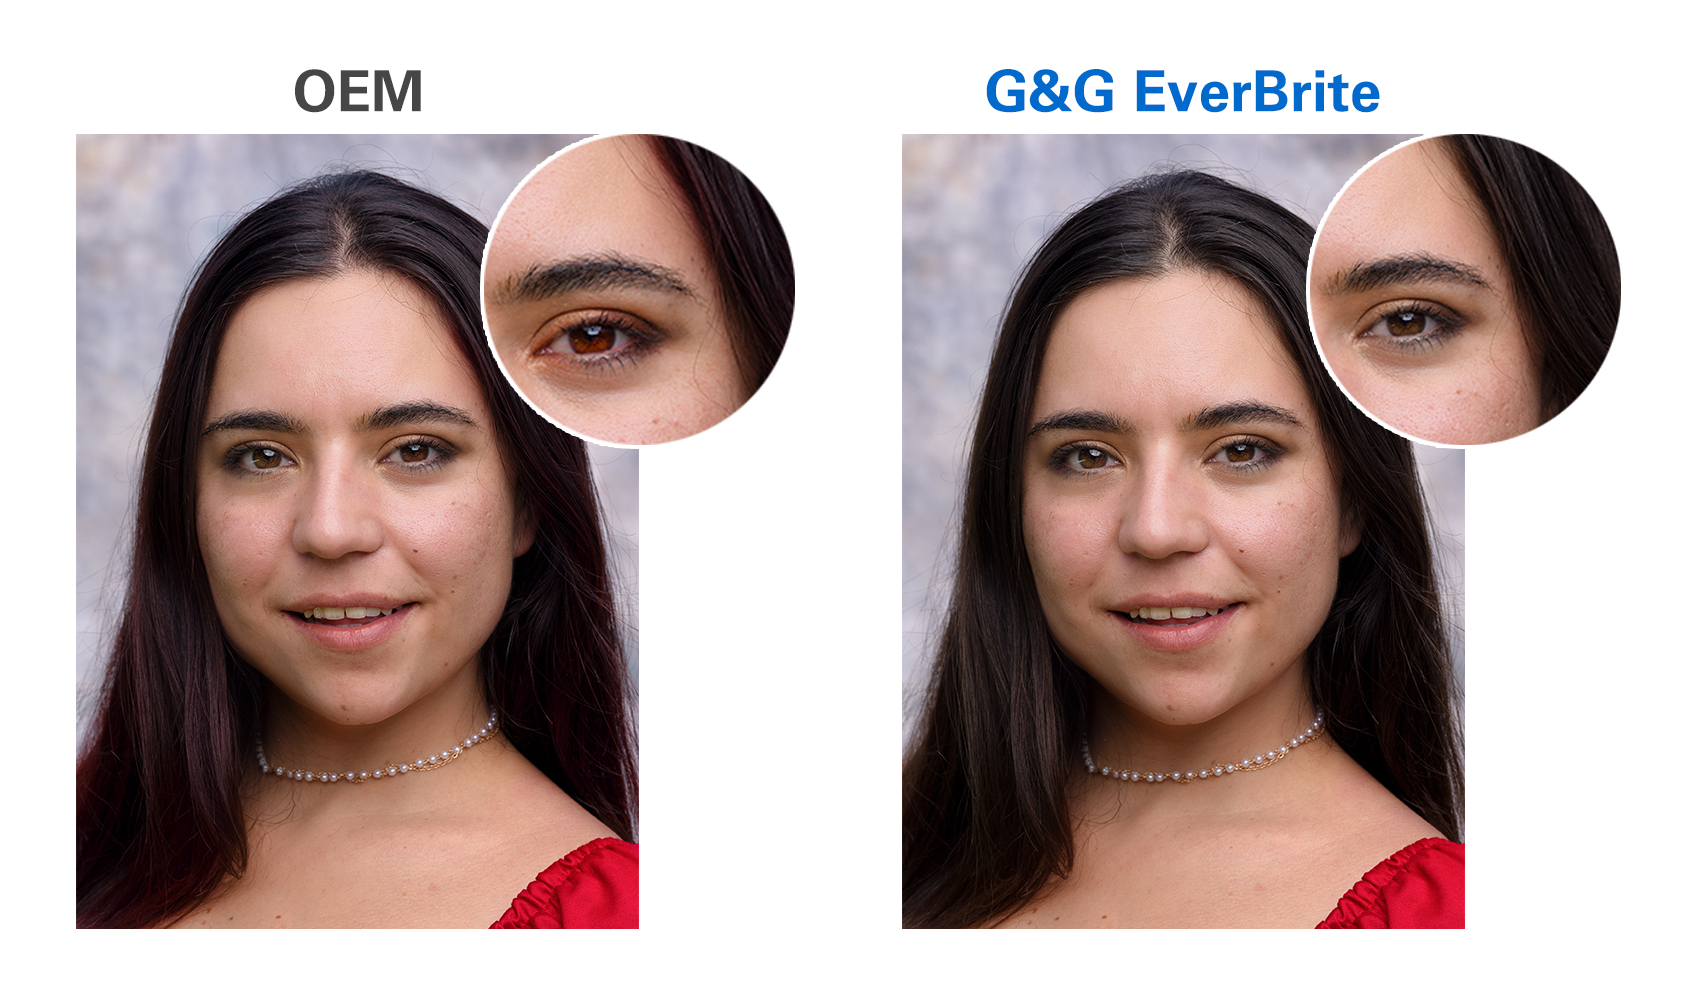 G&G EverBrite VS OEM